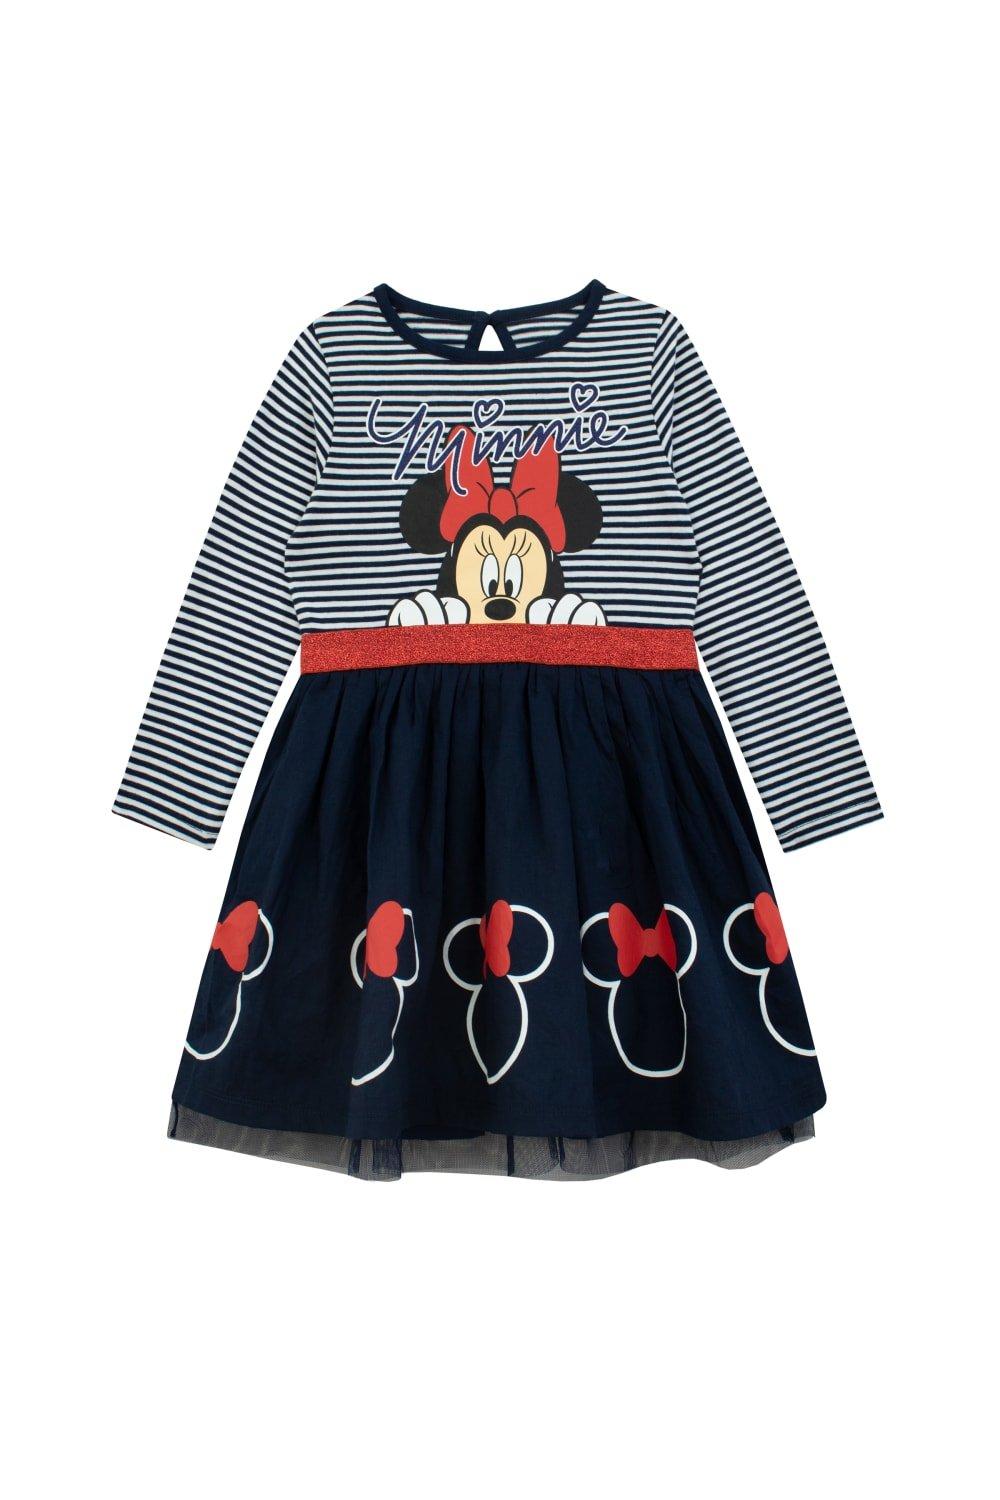 Disney Toddler Girls Minnie Mouse Cosplay Dress, Sizes 12M-5T - Walmart.com